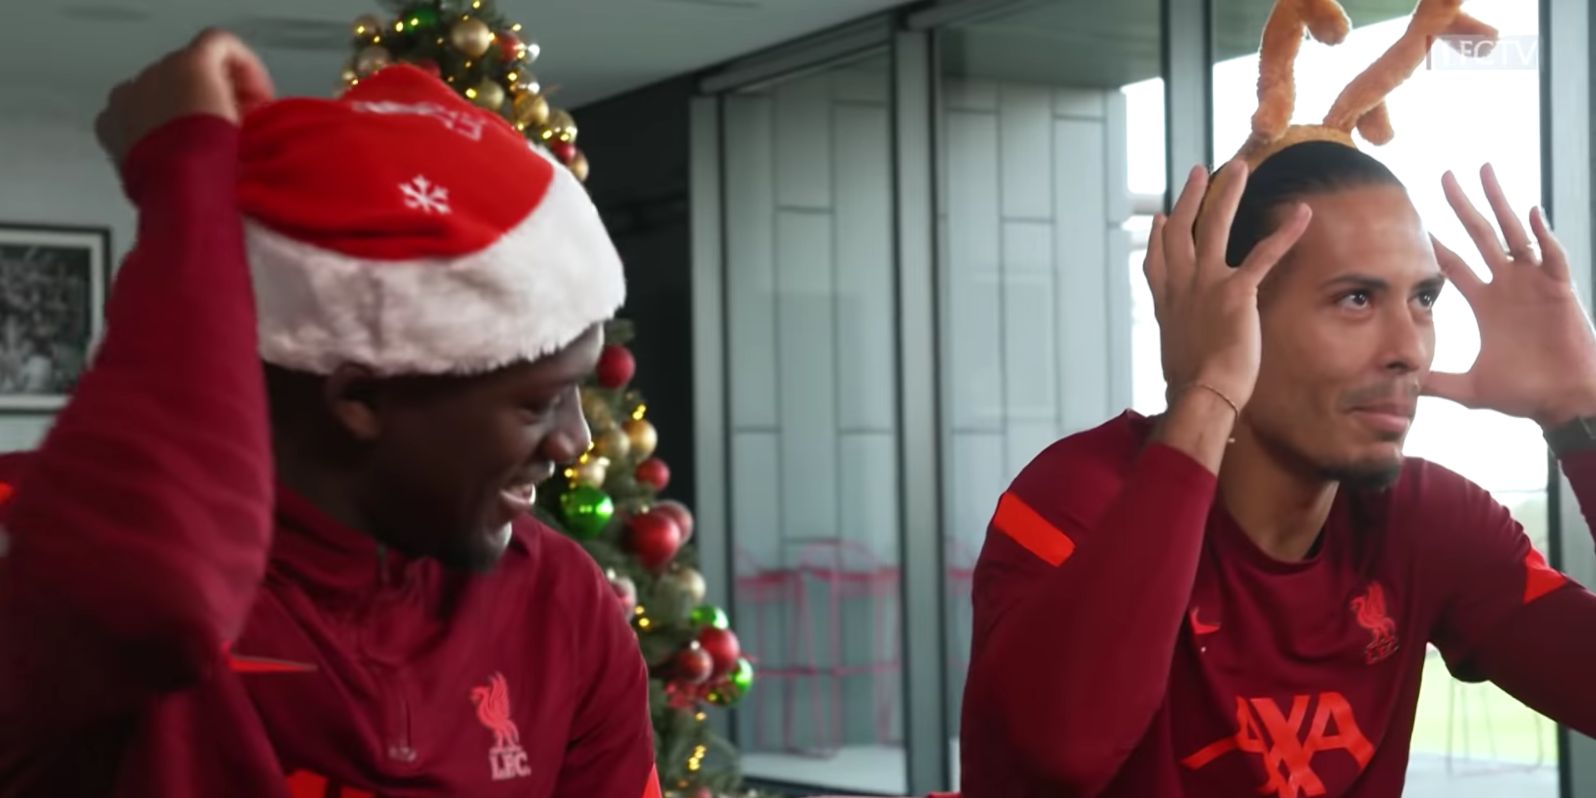 (Video) “I’ve got a big head” – Virgil van Dijk explains that he can’t wear Santa hats due to the size of head